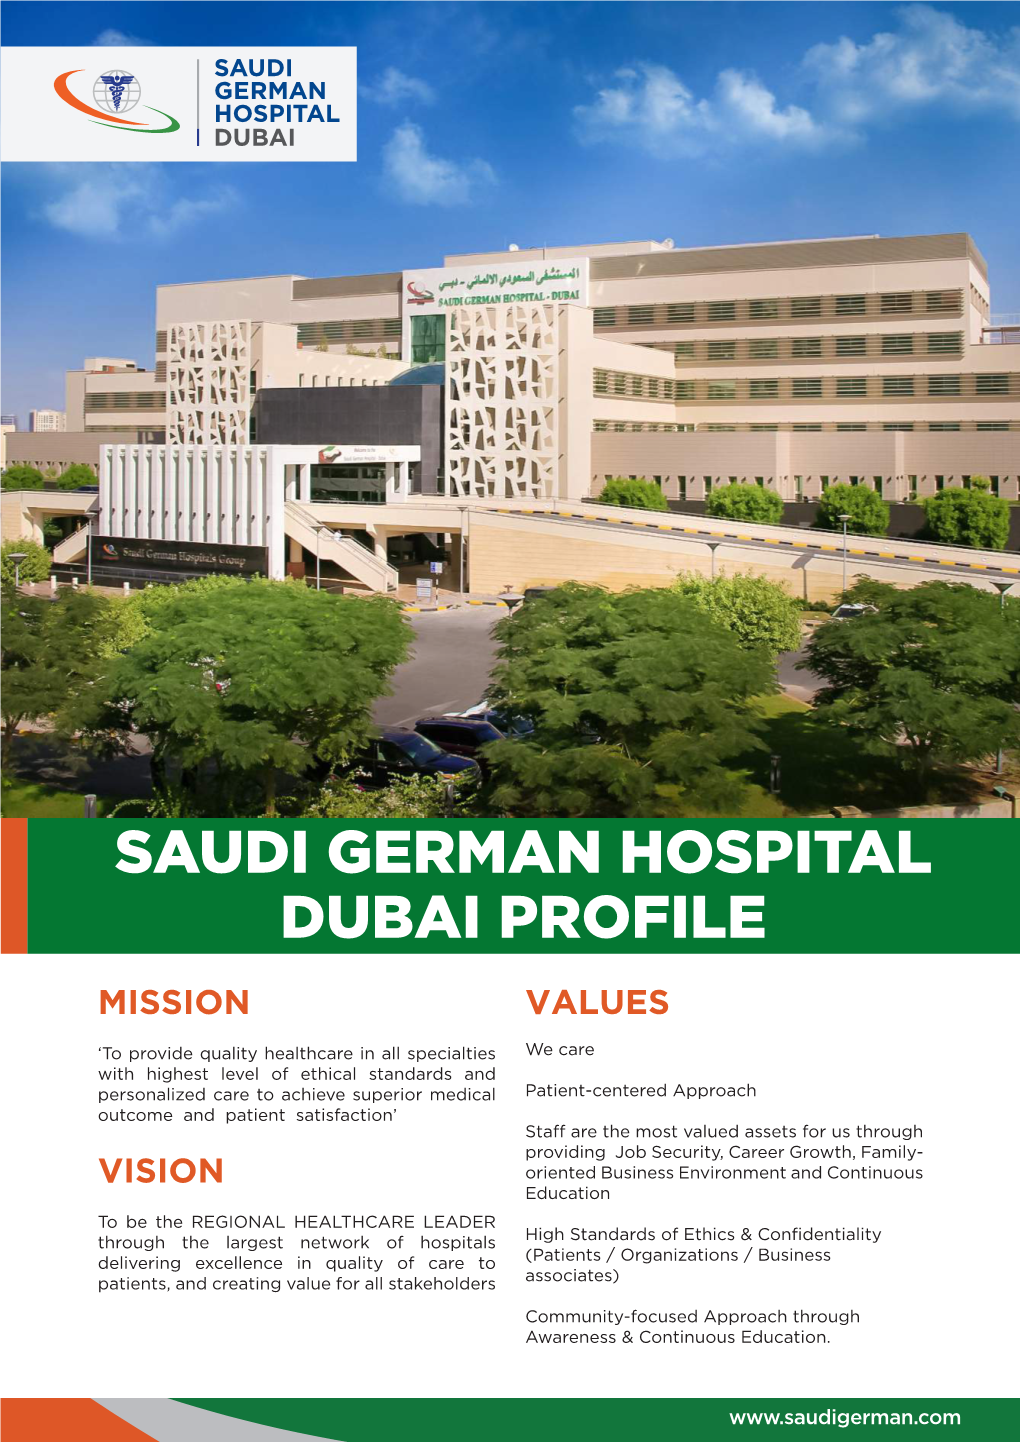 Saudi German Hospital Dubai Profile